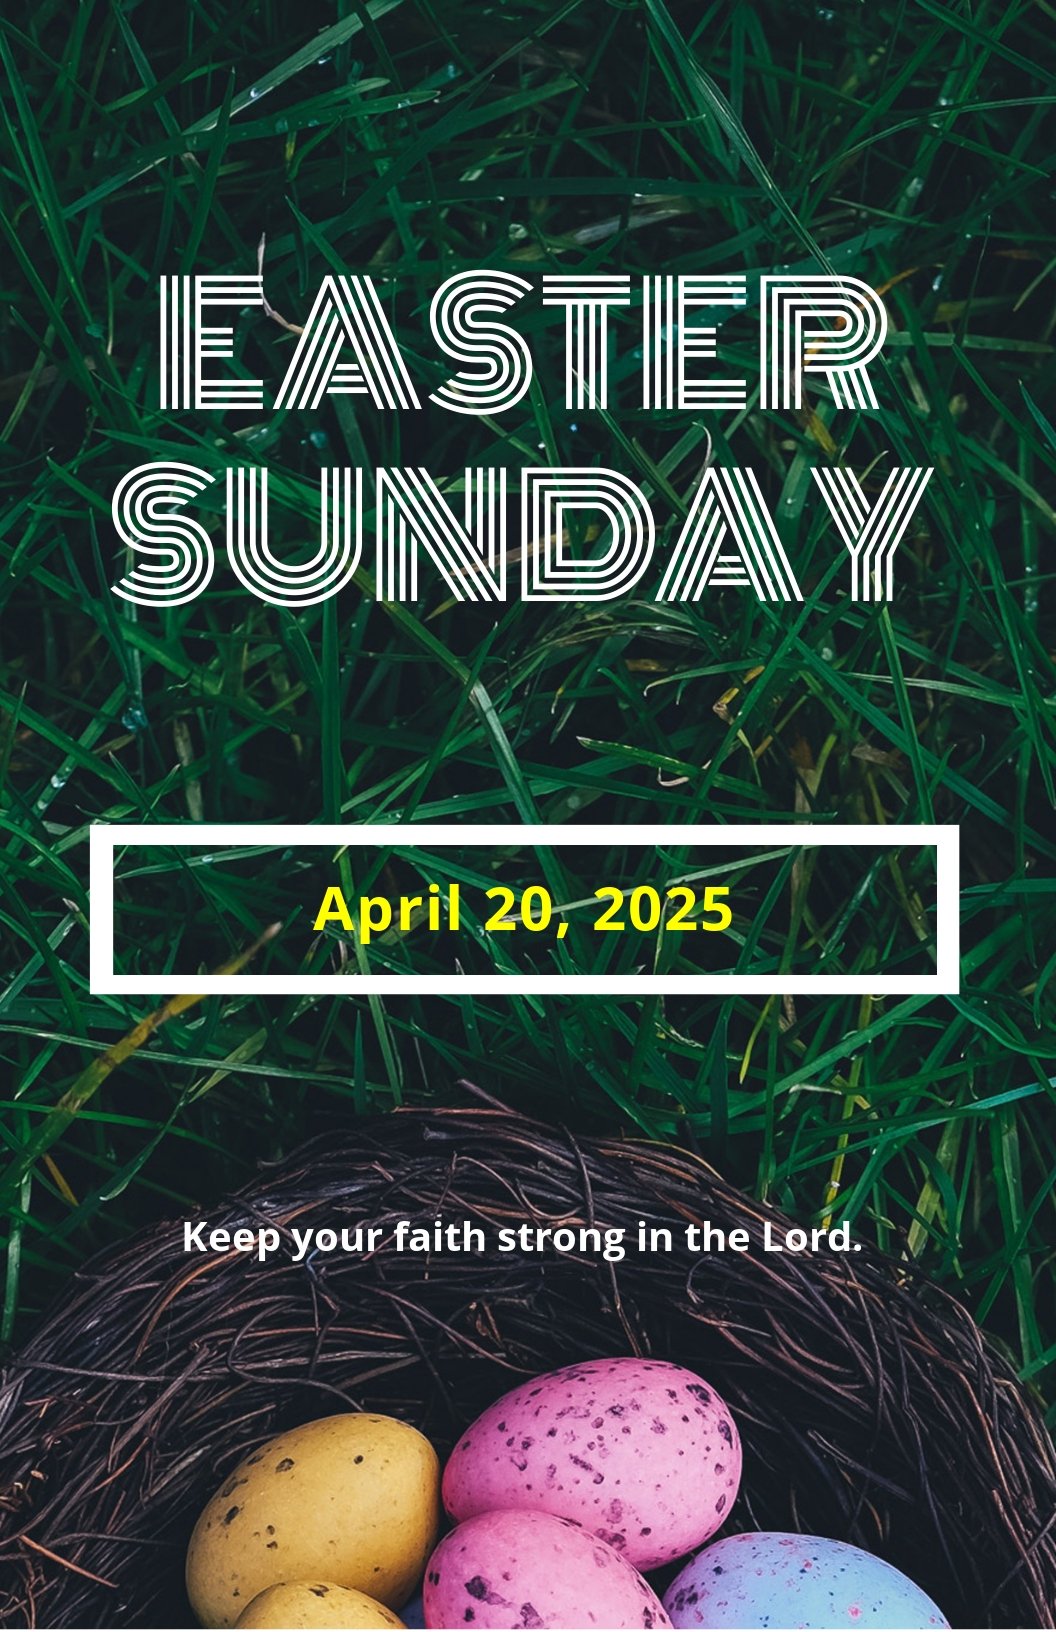 Easter Sunday A4 Poster Template | PSD | Template.net